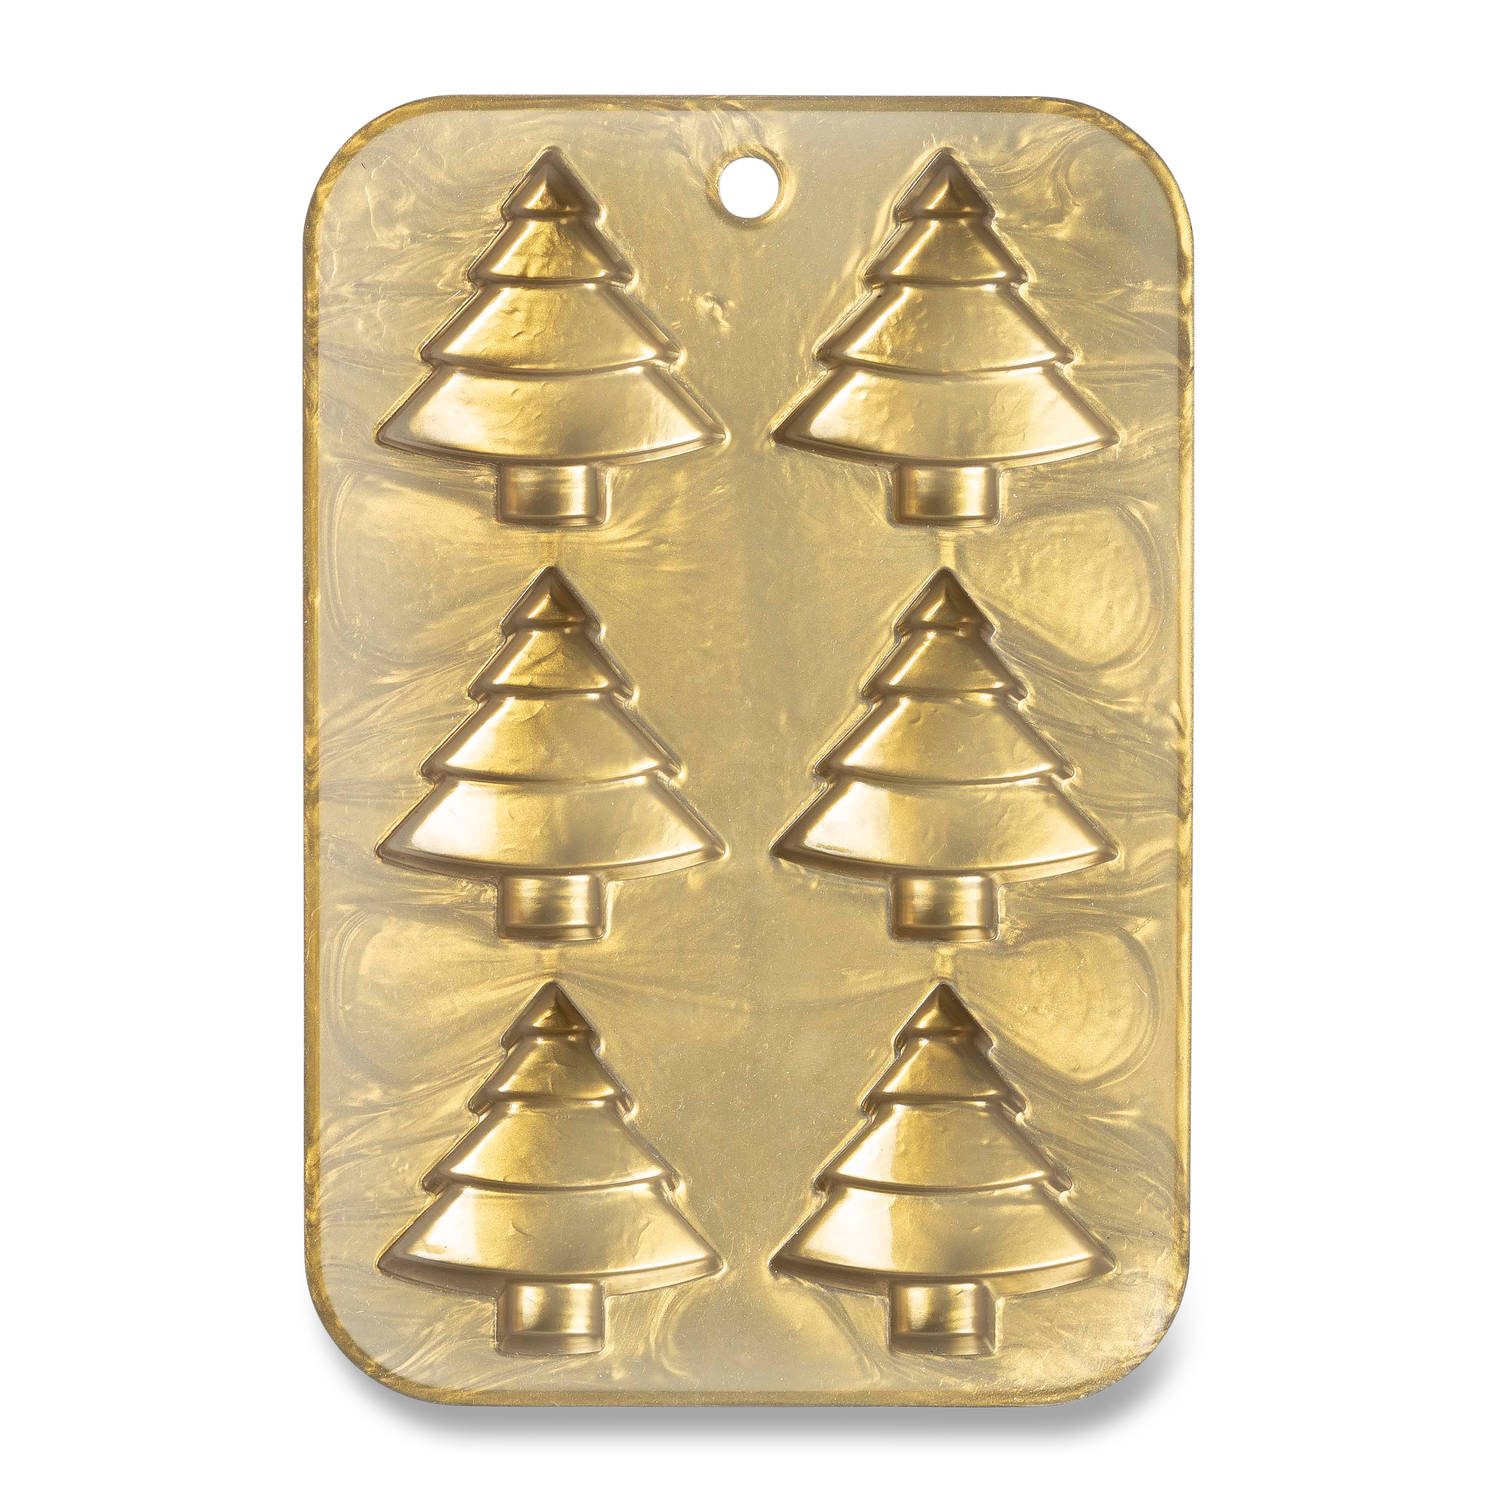 Op te slaan Gelukkig is dat Floreren Blokker kerst mini muffinvormpjes kerstboom 6st - goud | Blokker